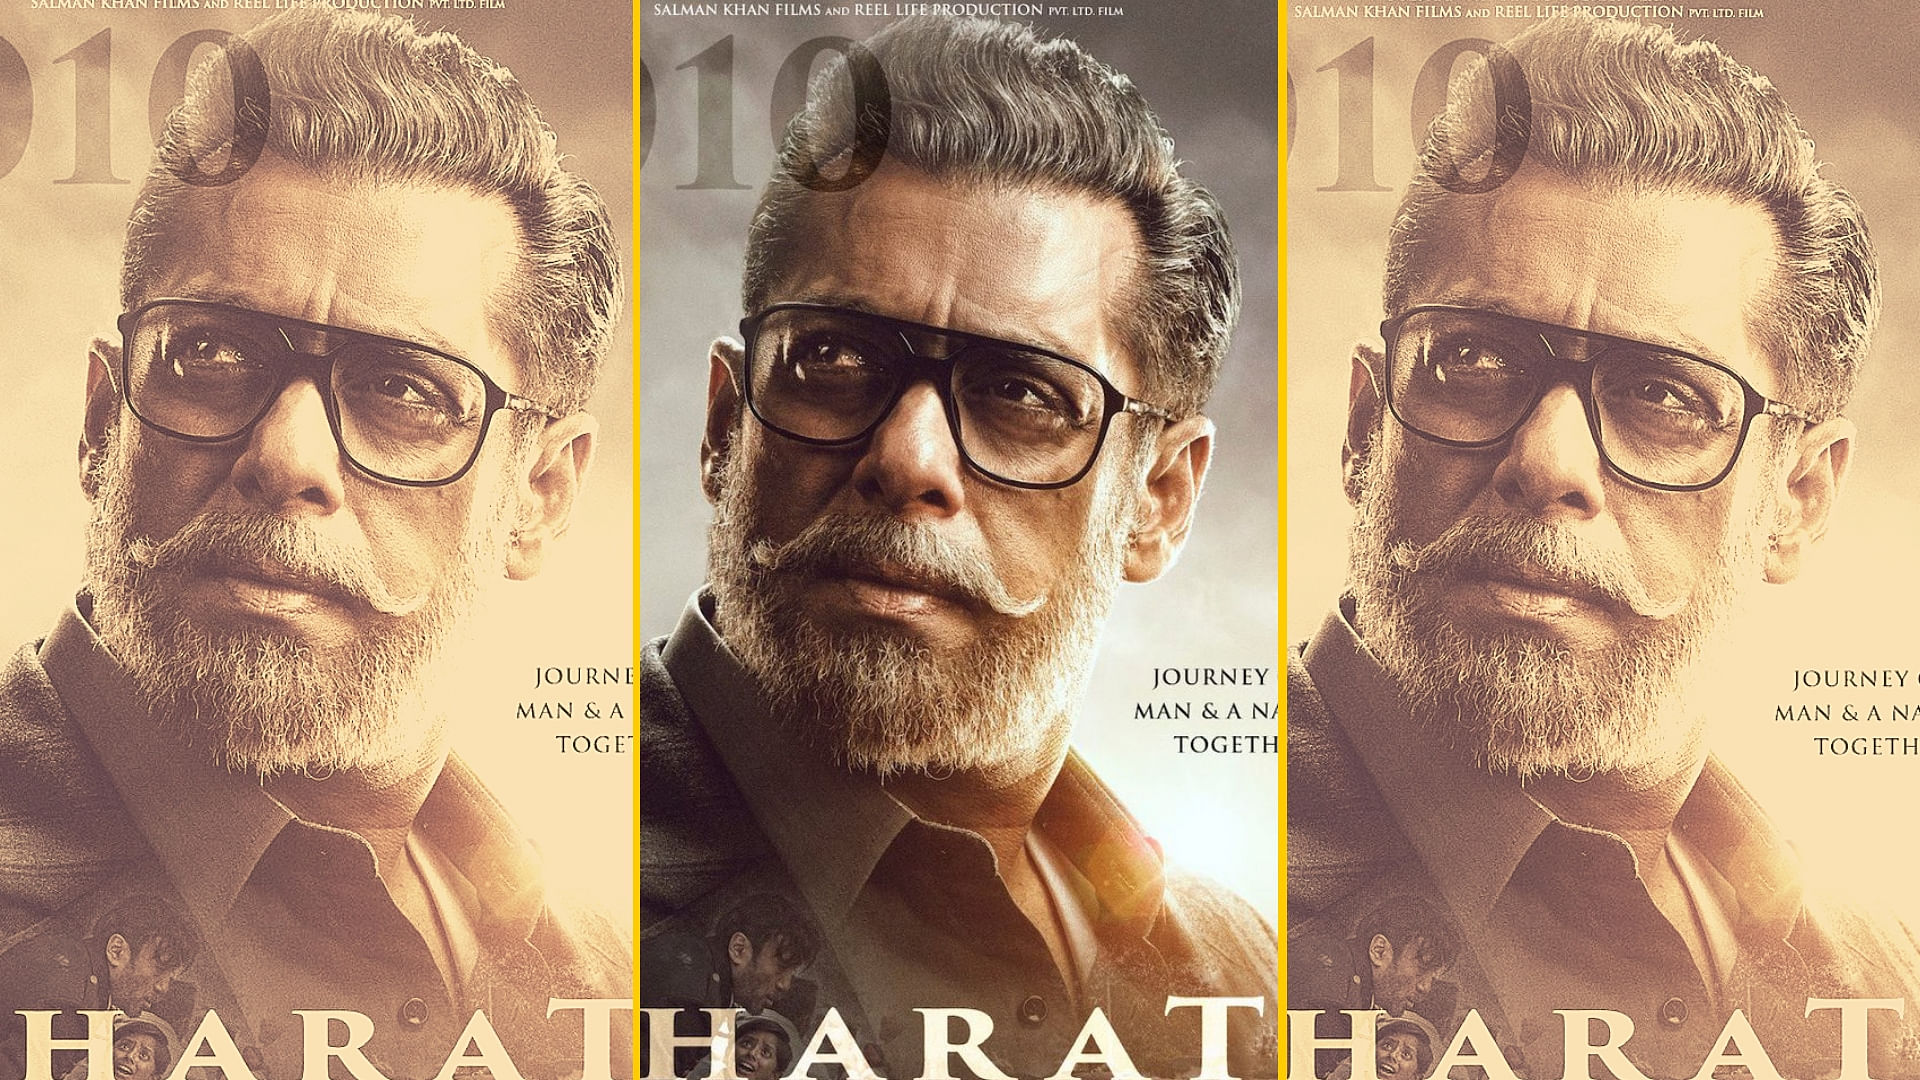 Salman Khan in a poster for <i>Bharat</i>.